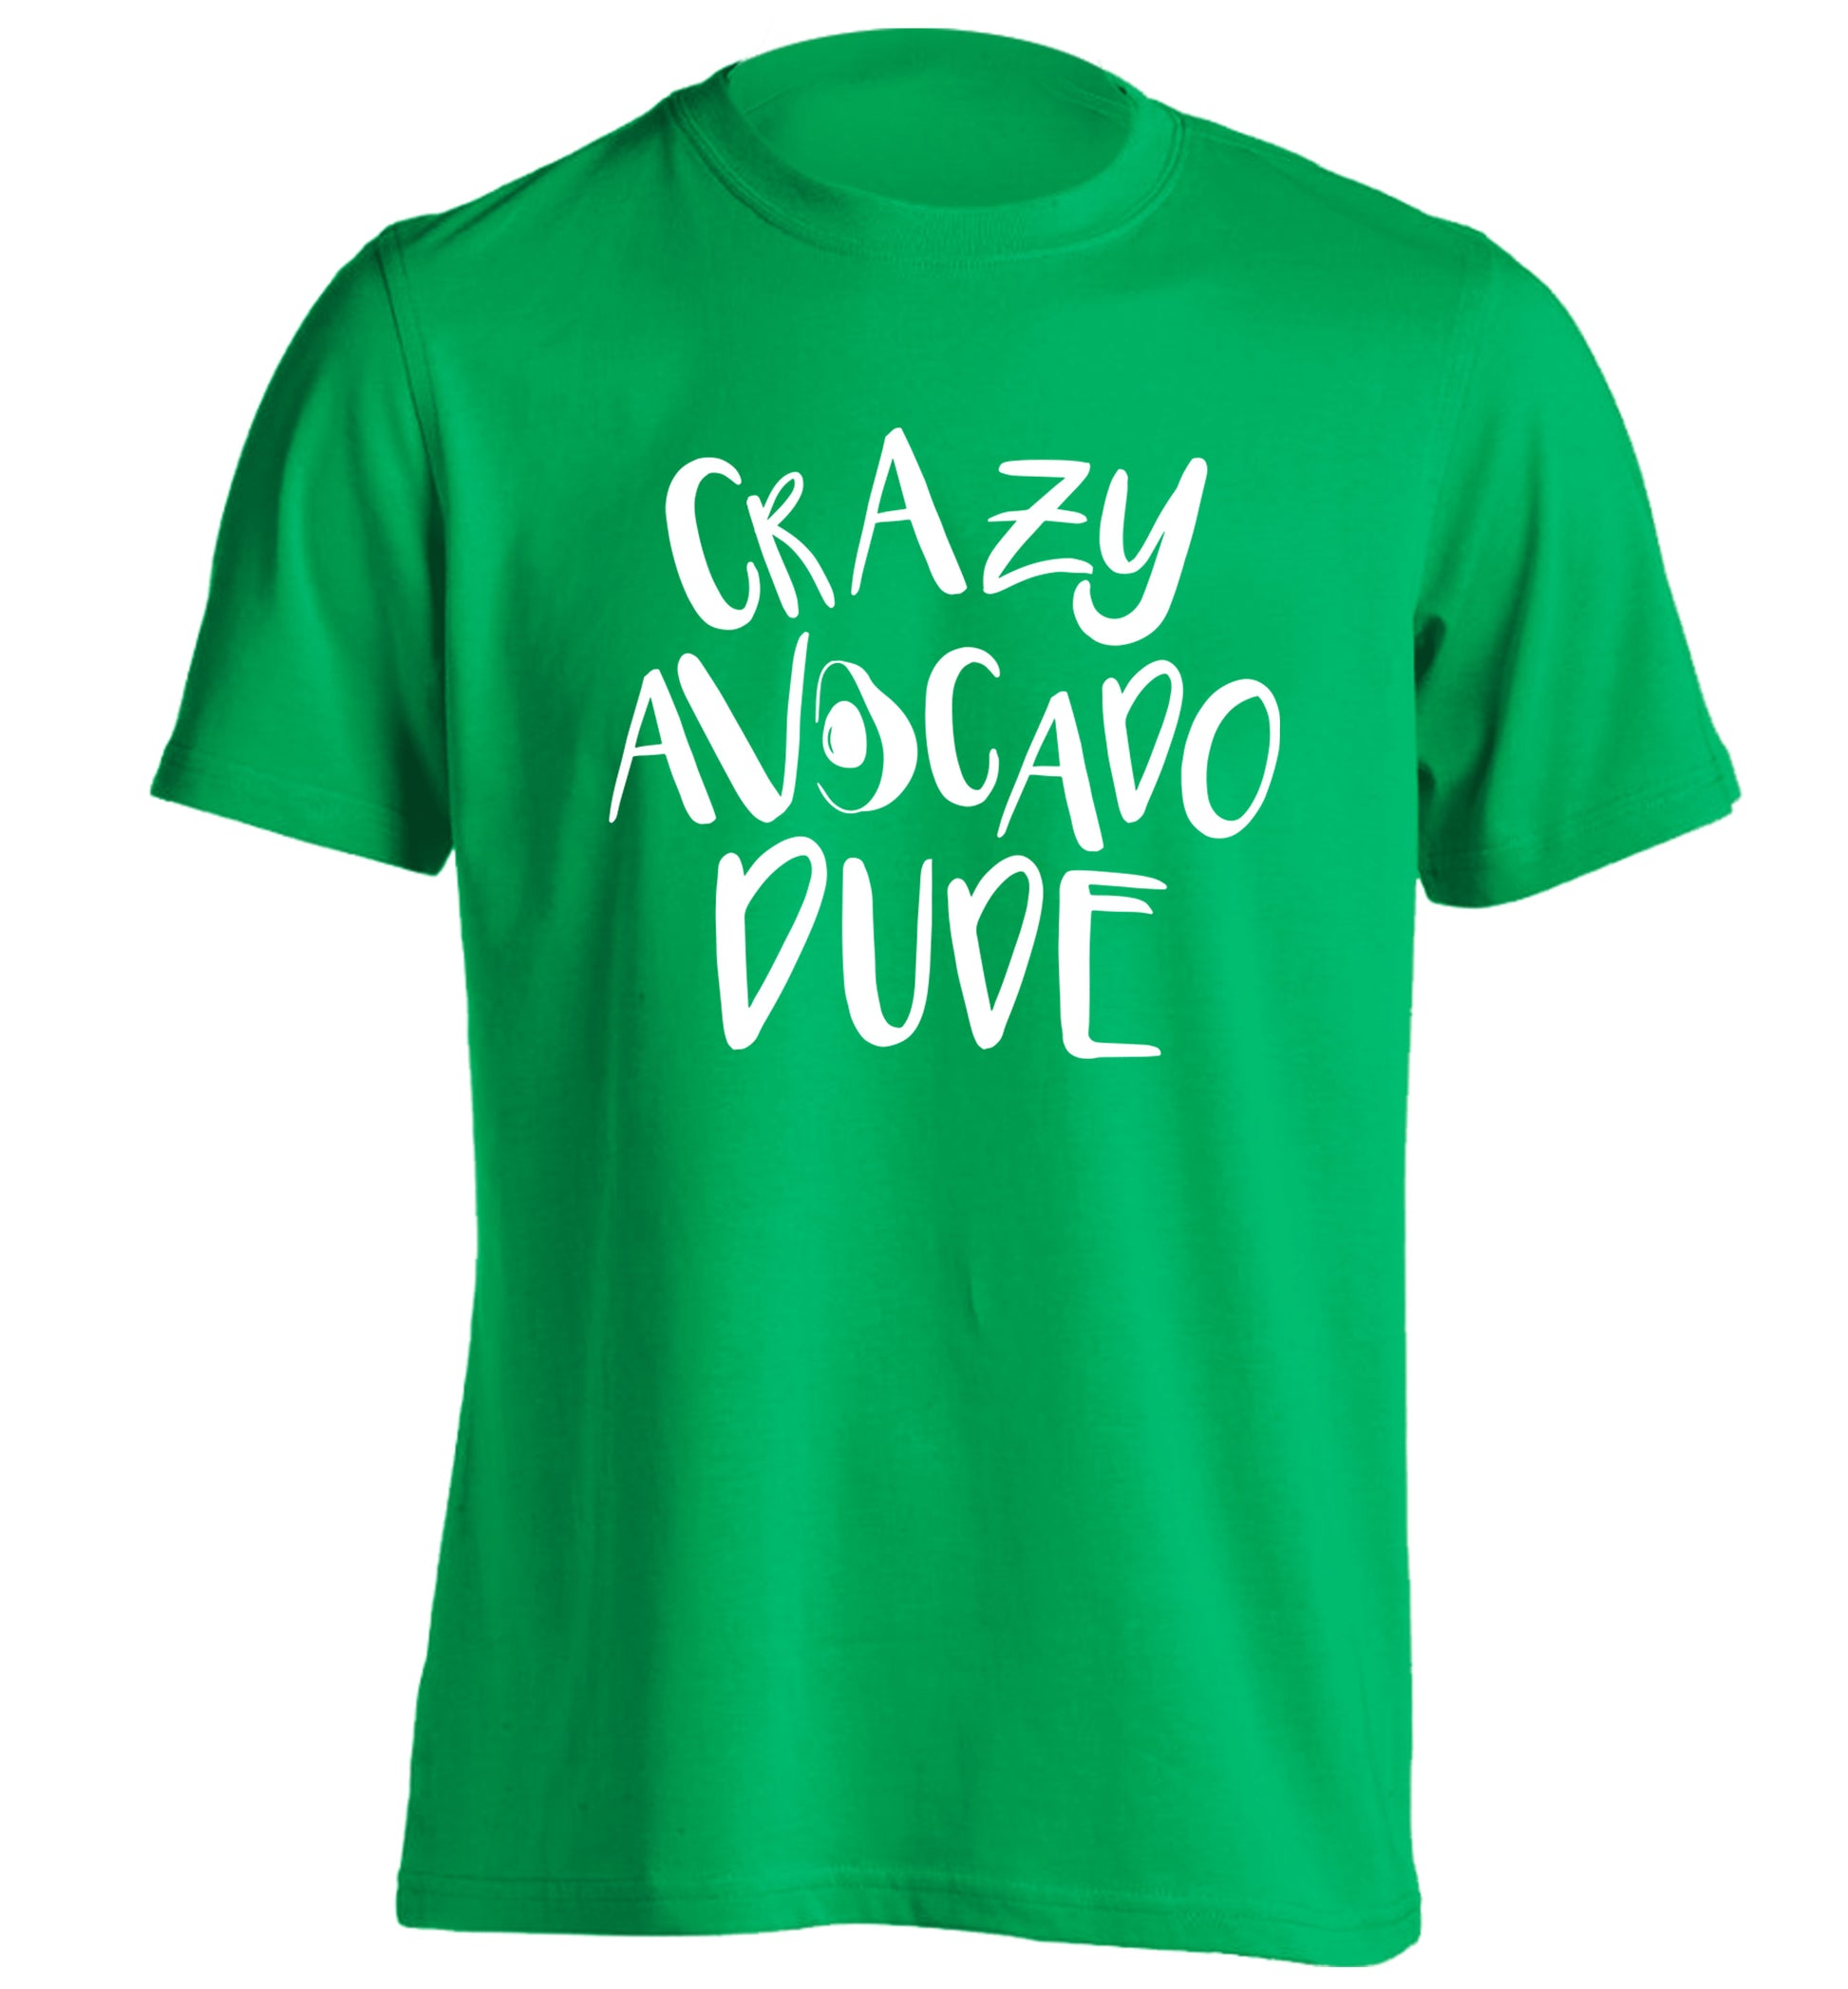 Crazy avocado dude adults unisex green Tshirt 2XL